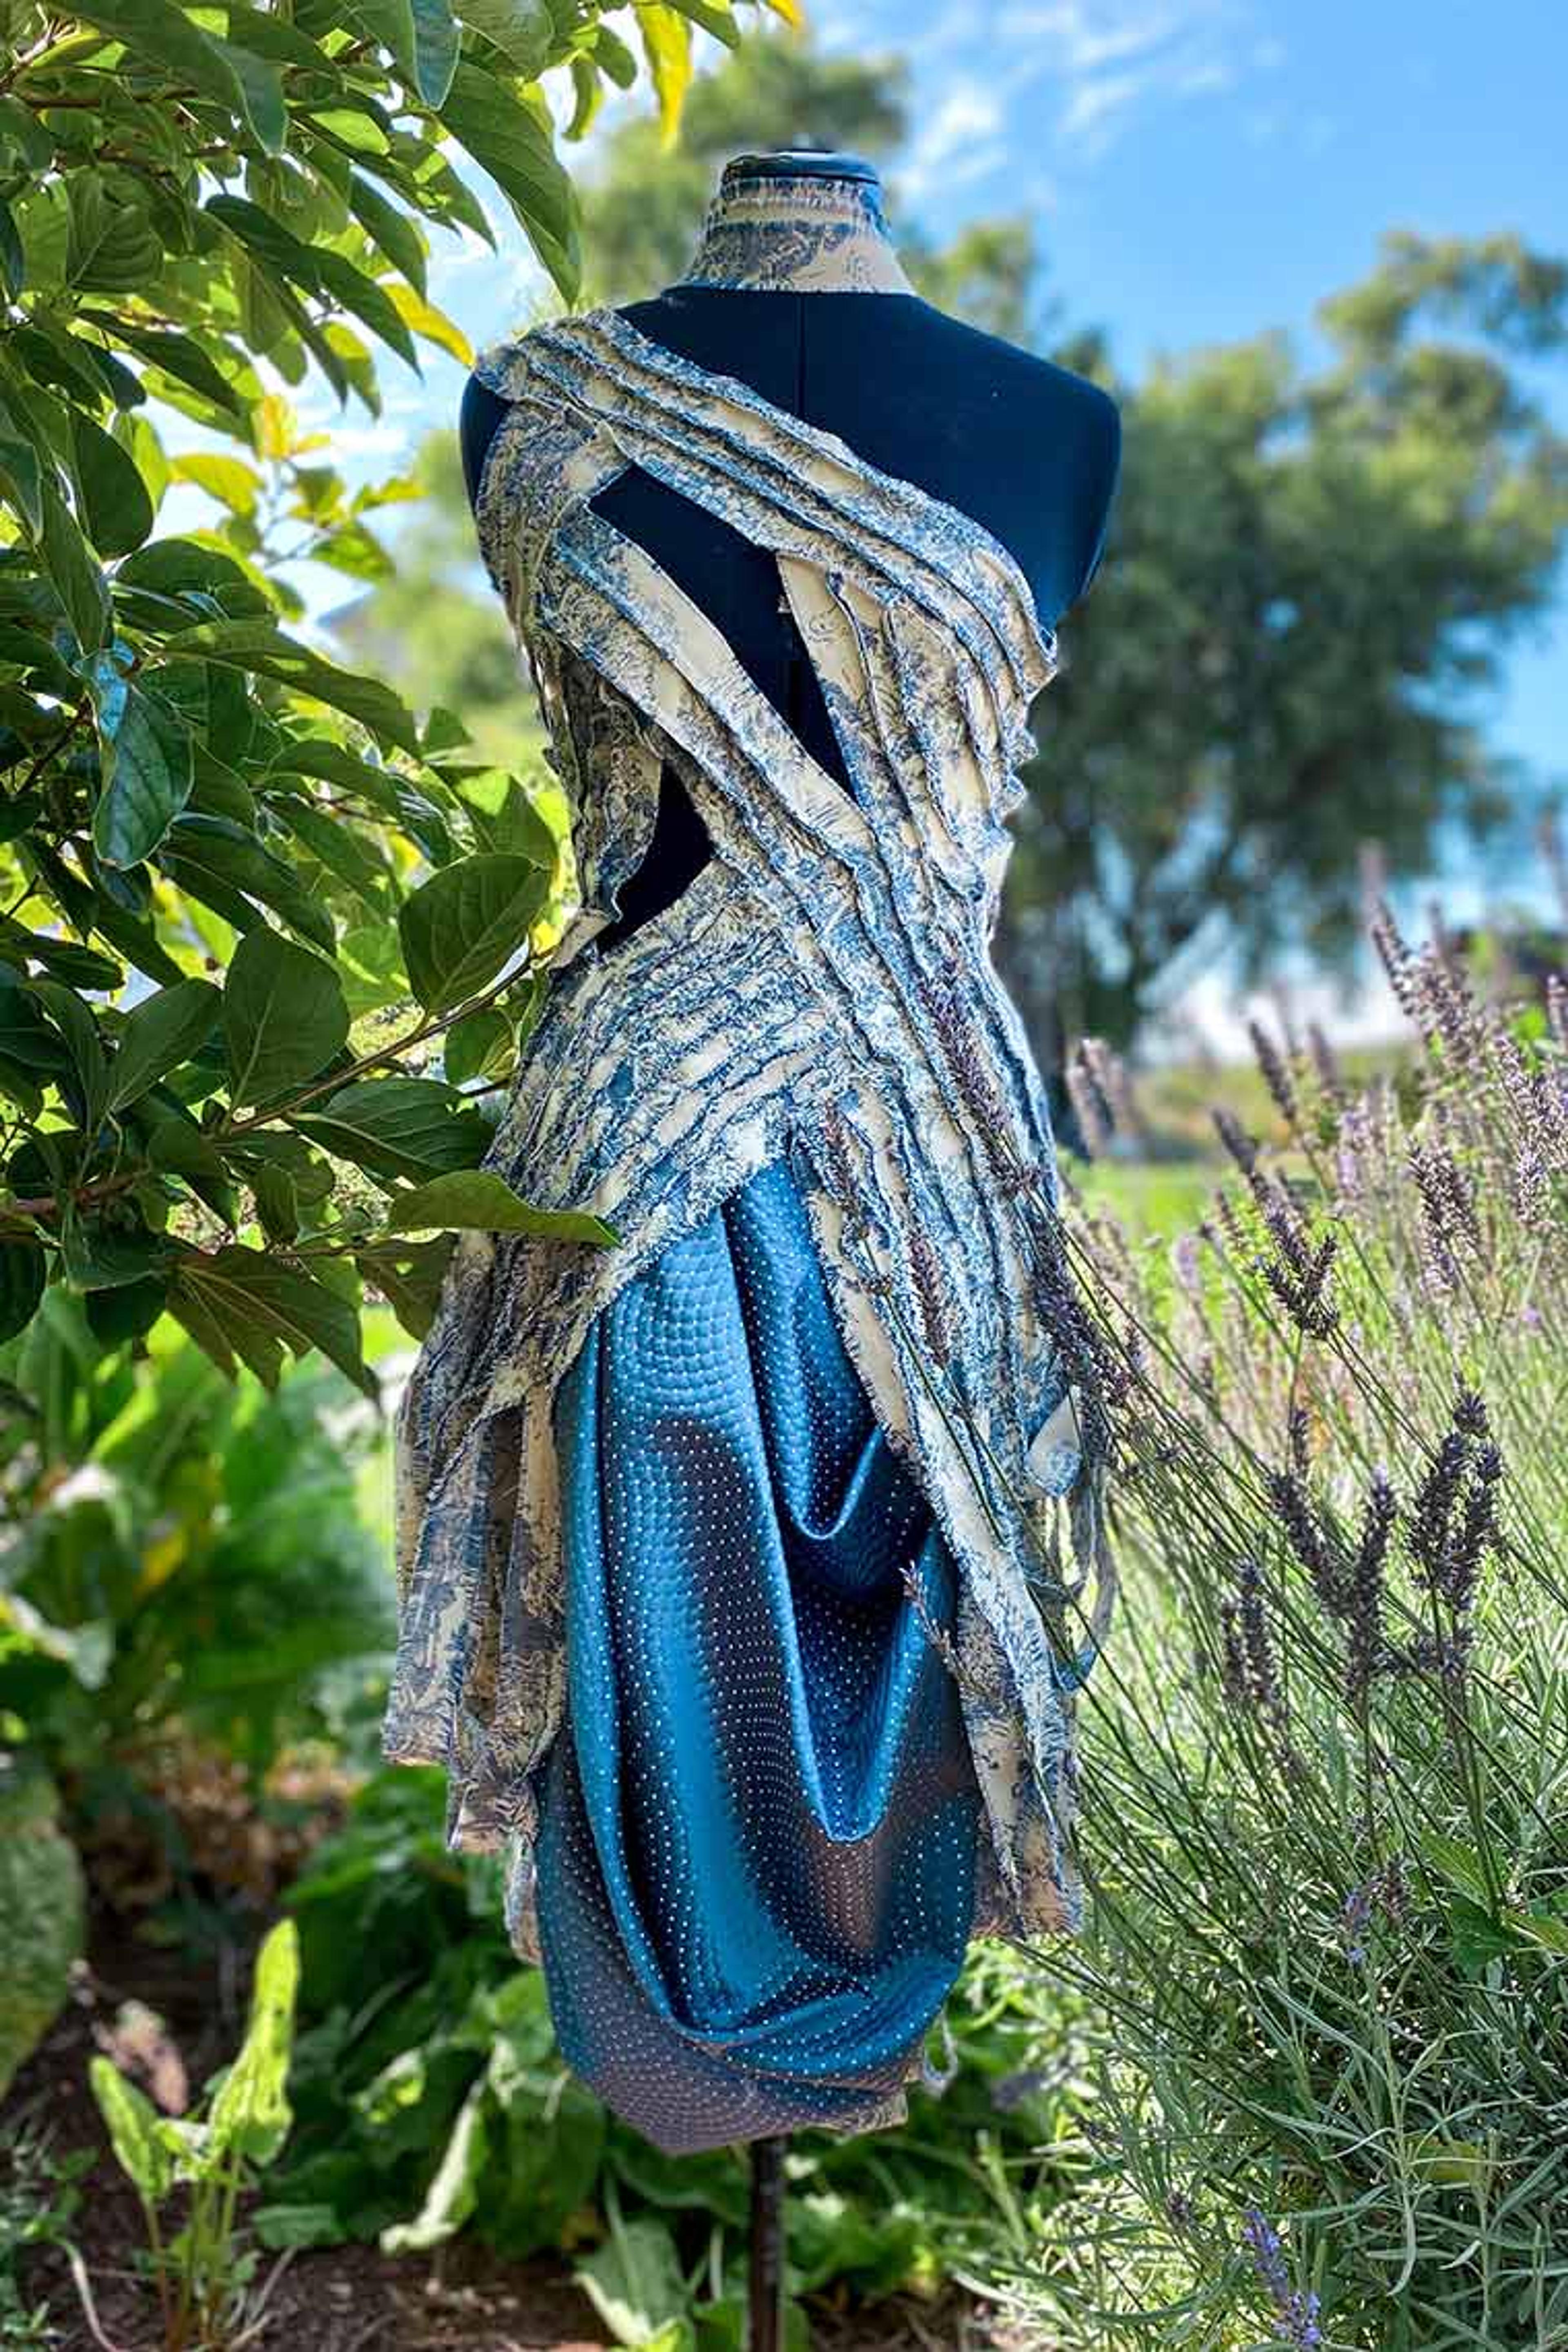 Parker Spear's blue dress design on display in nature